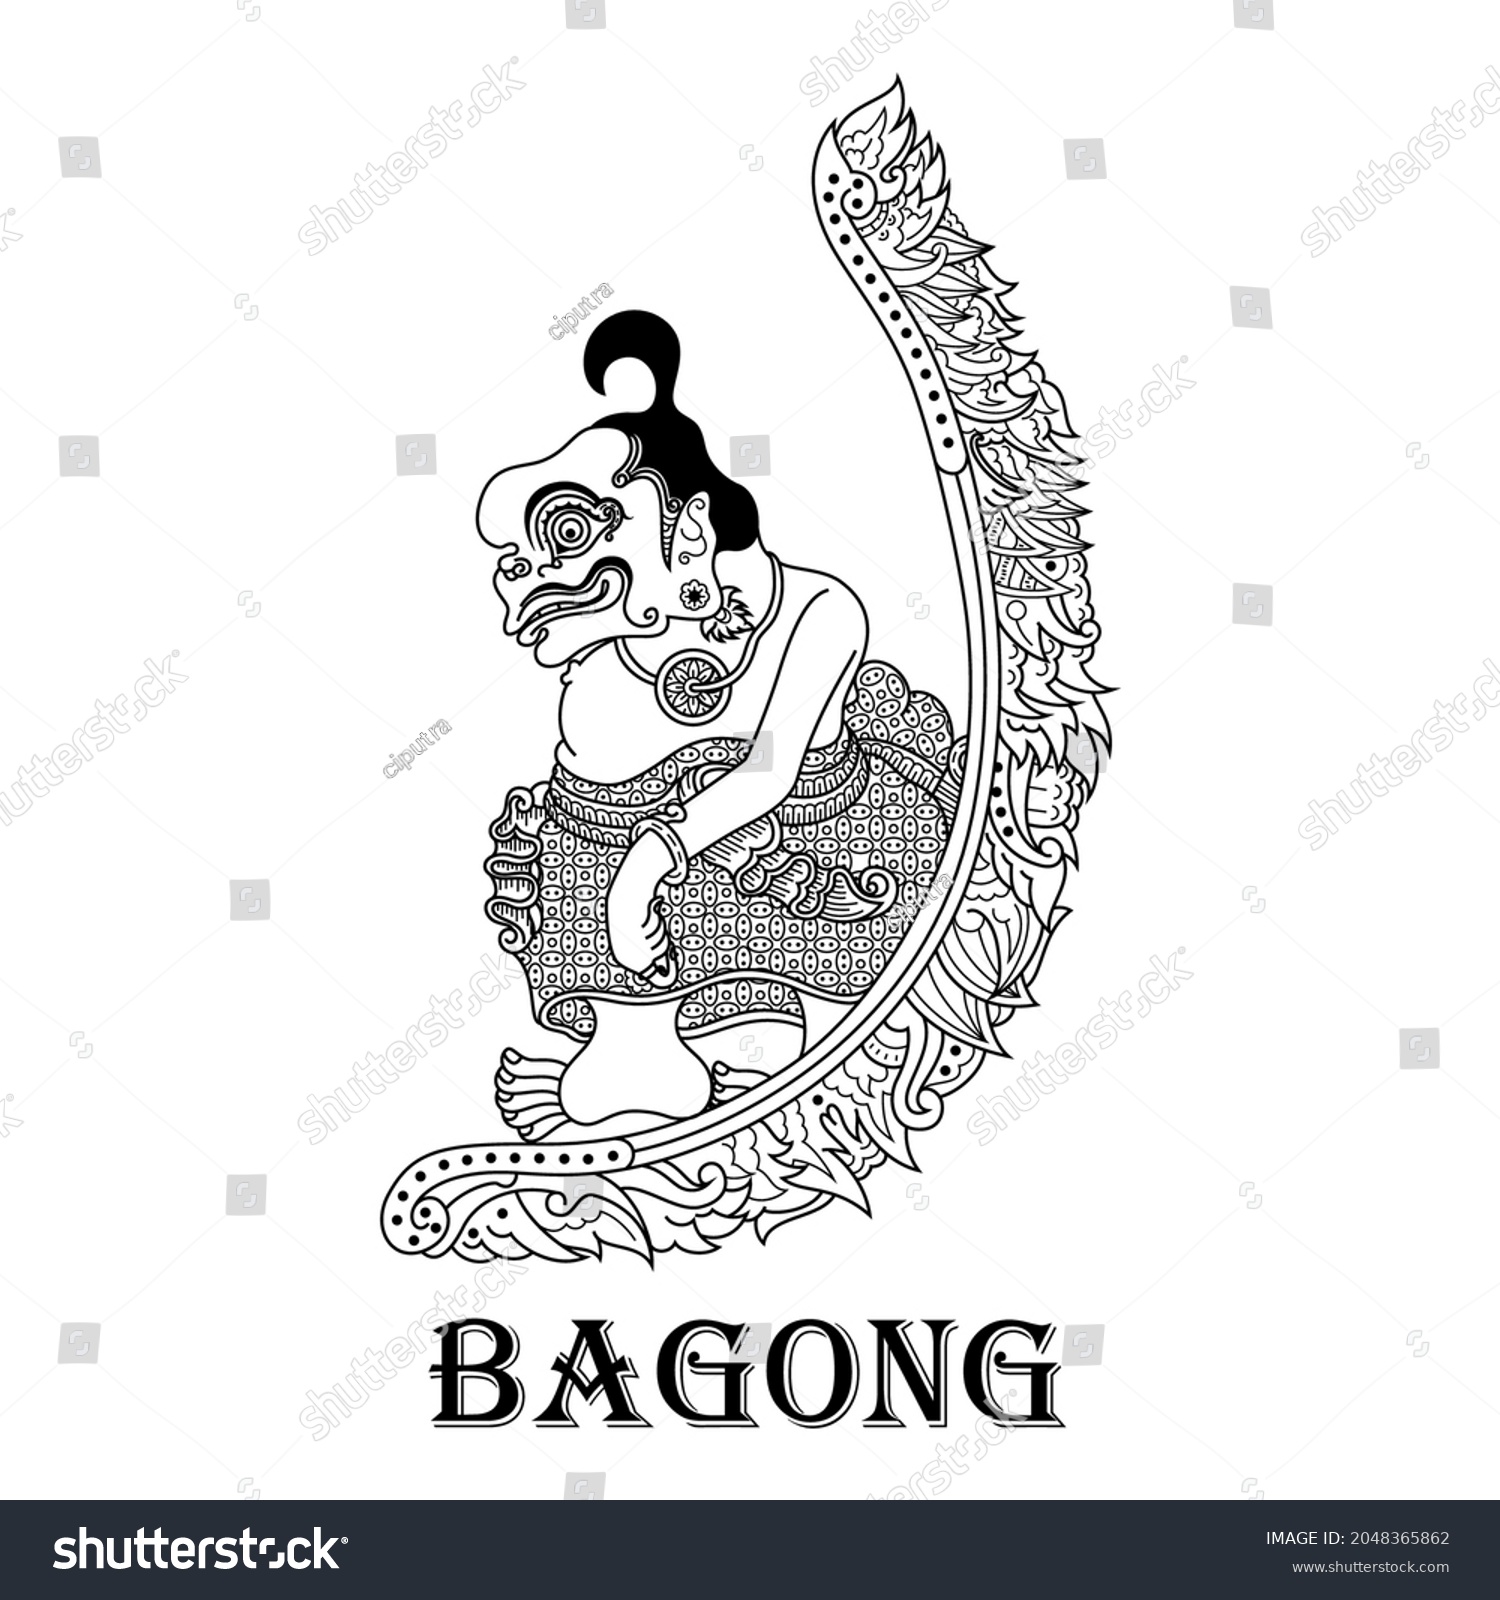 SVG of Wayang kulit bagong character in zentangle style svg